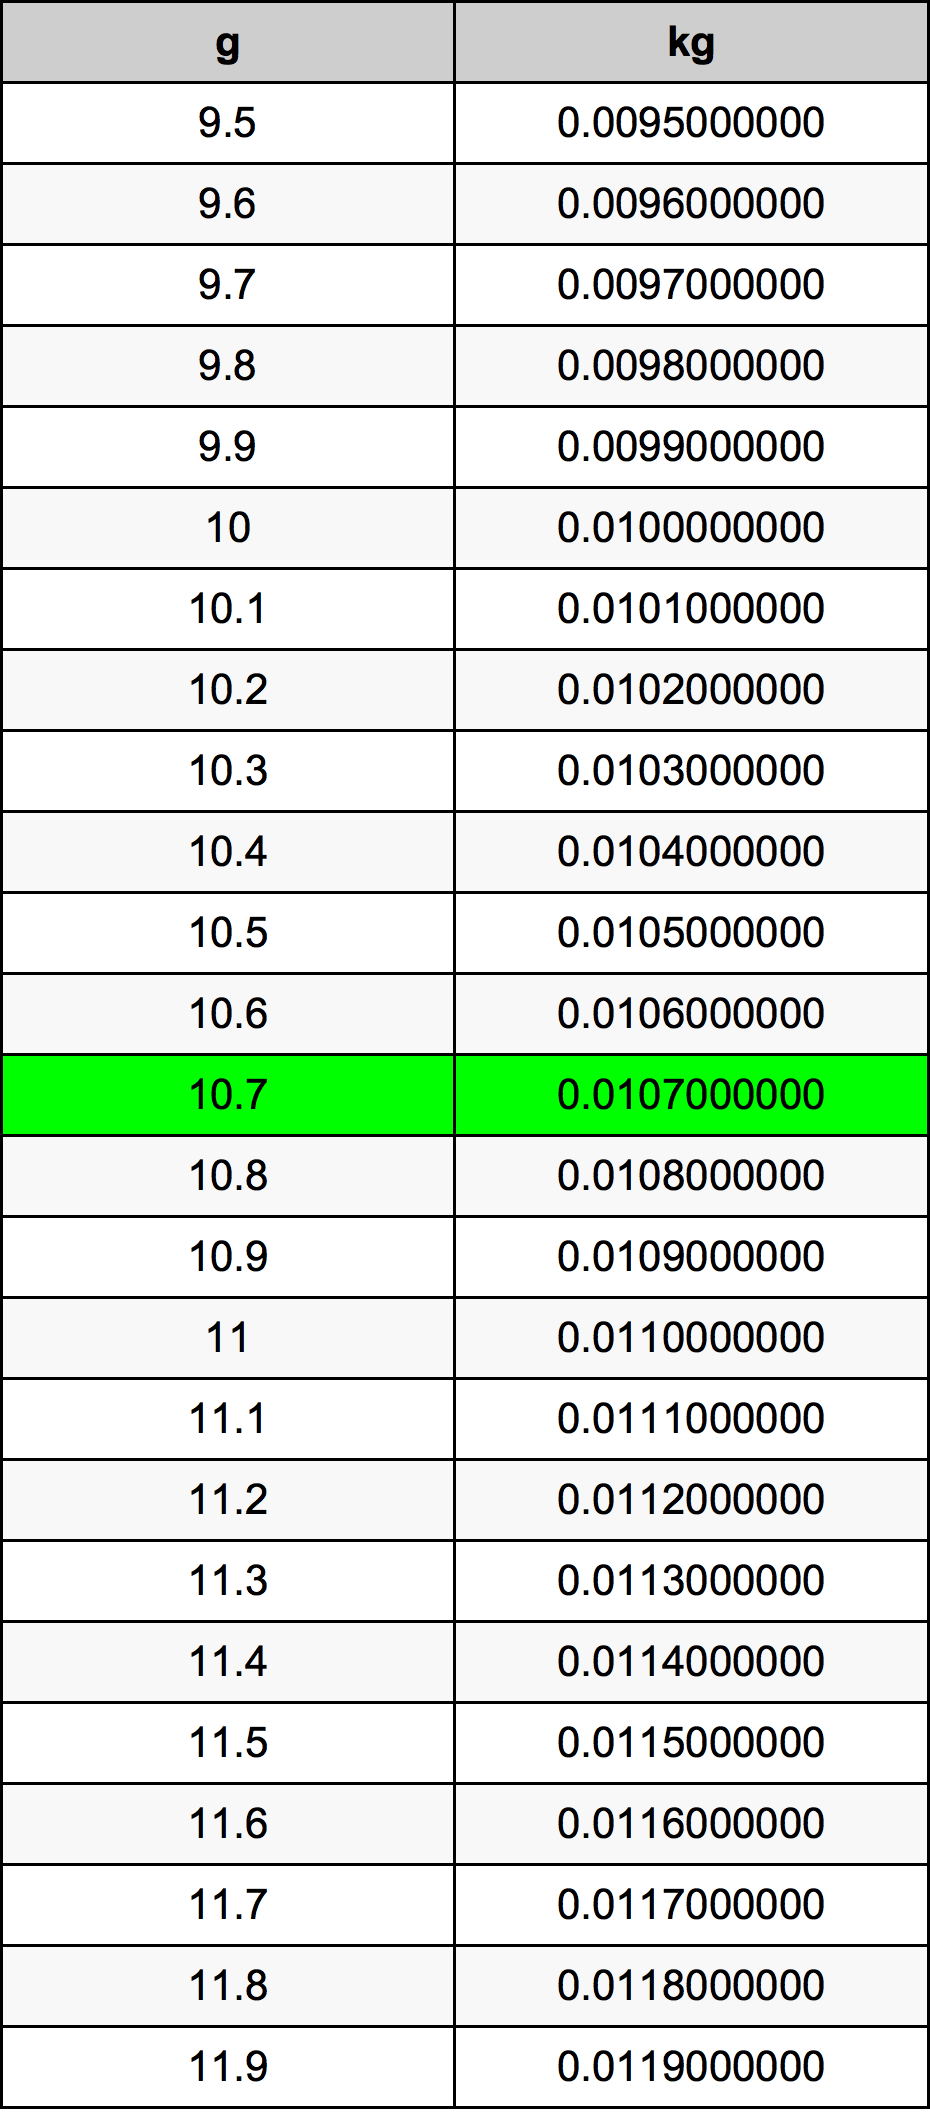 10.7 غرام جدول تحويل